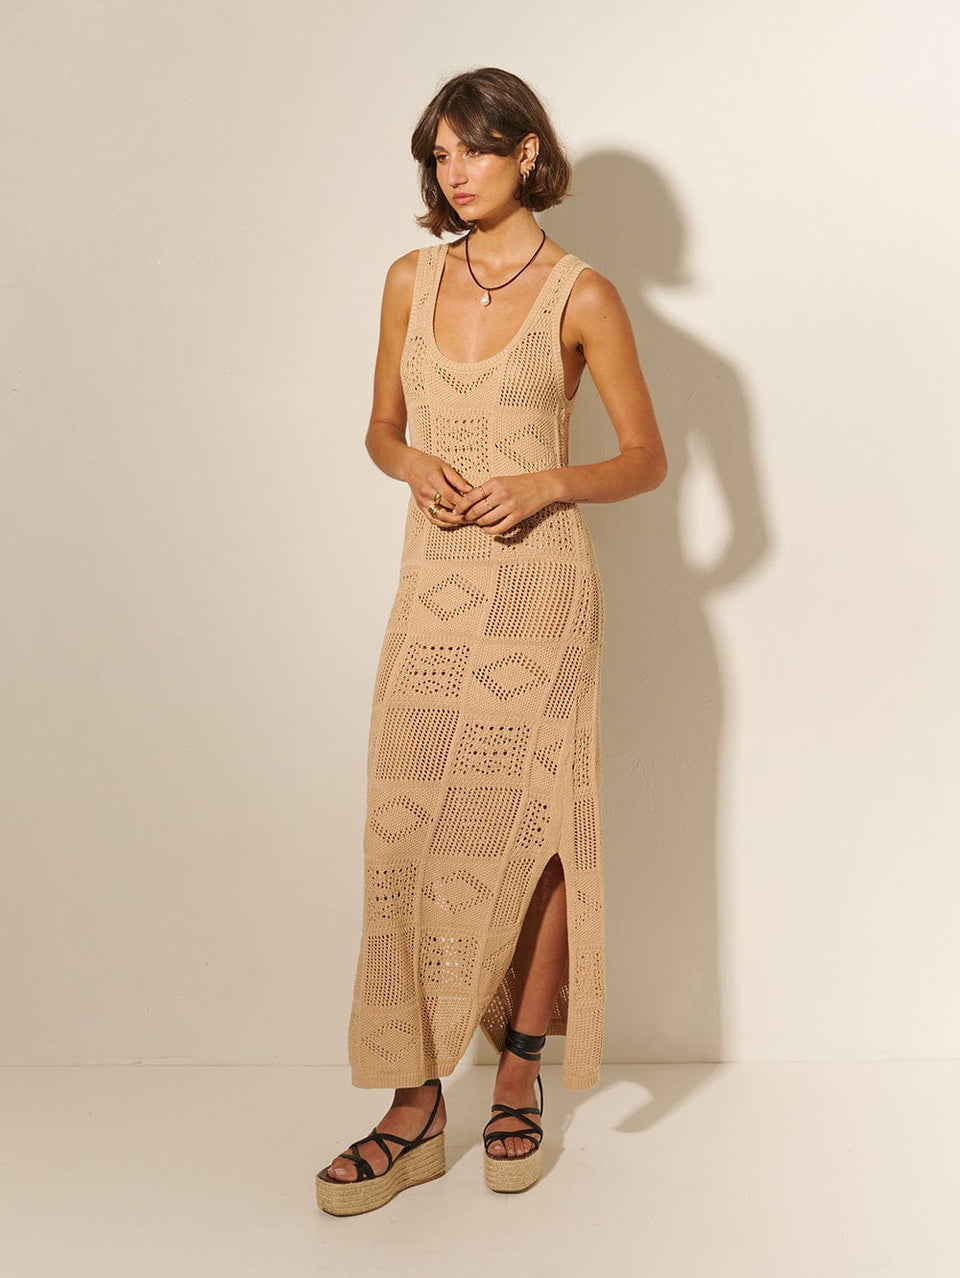 Clementine Midi Dress KIVARI | Model wears natural coloured midi dress